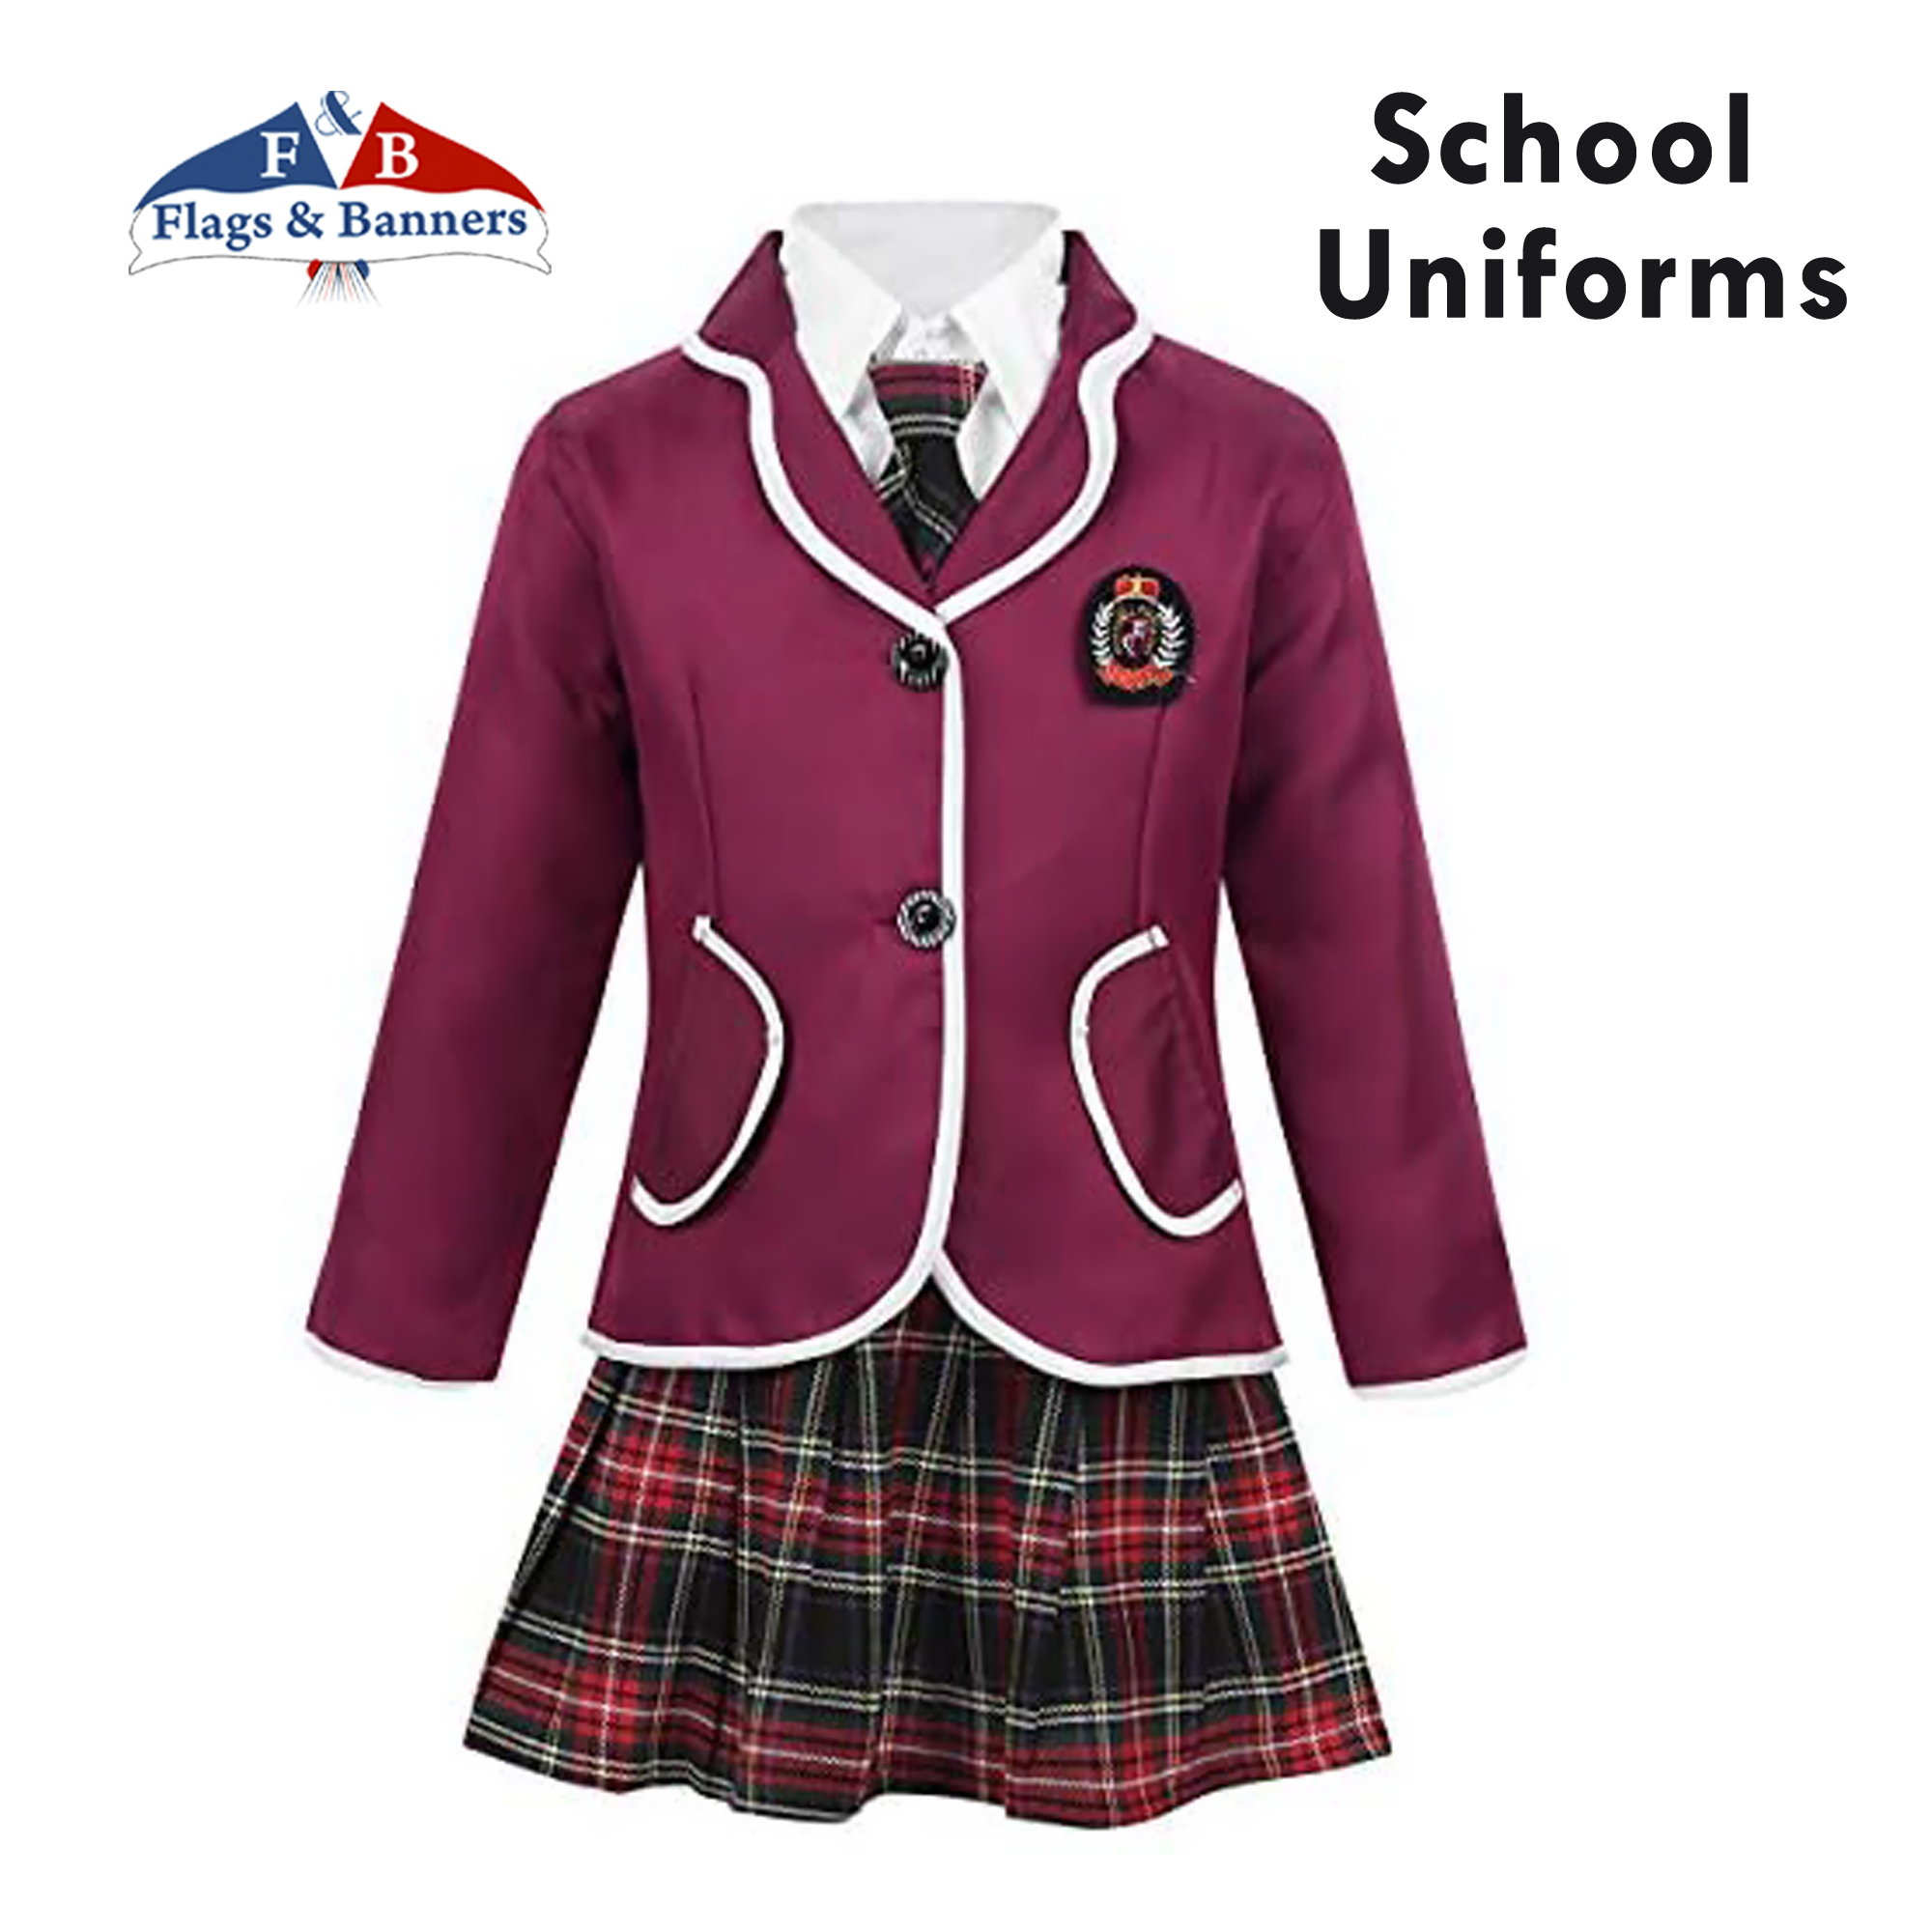 School Uniforms 01